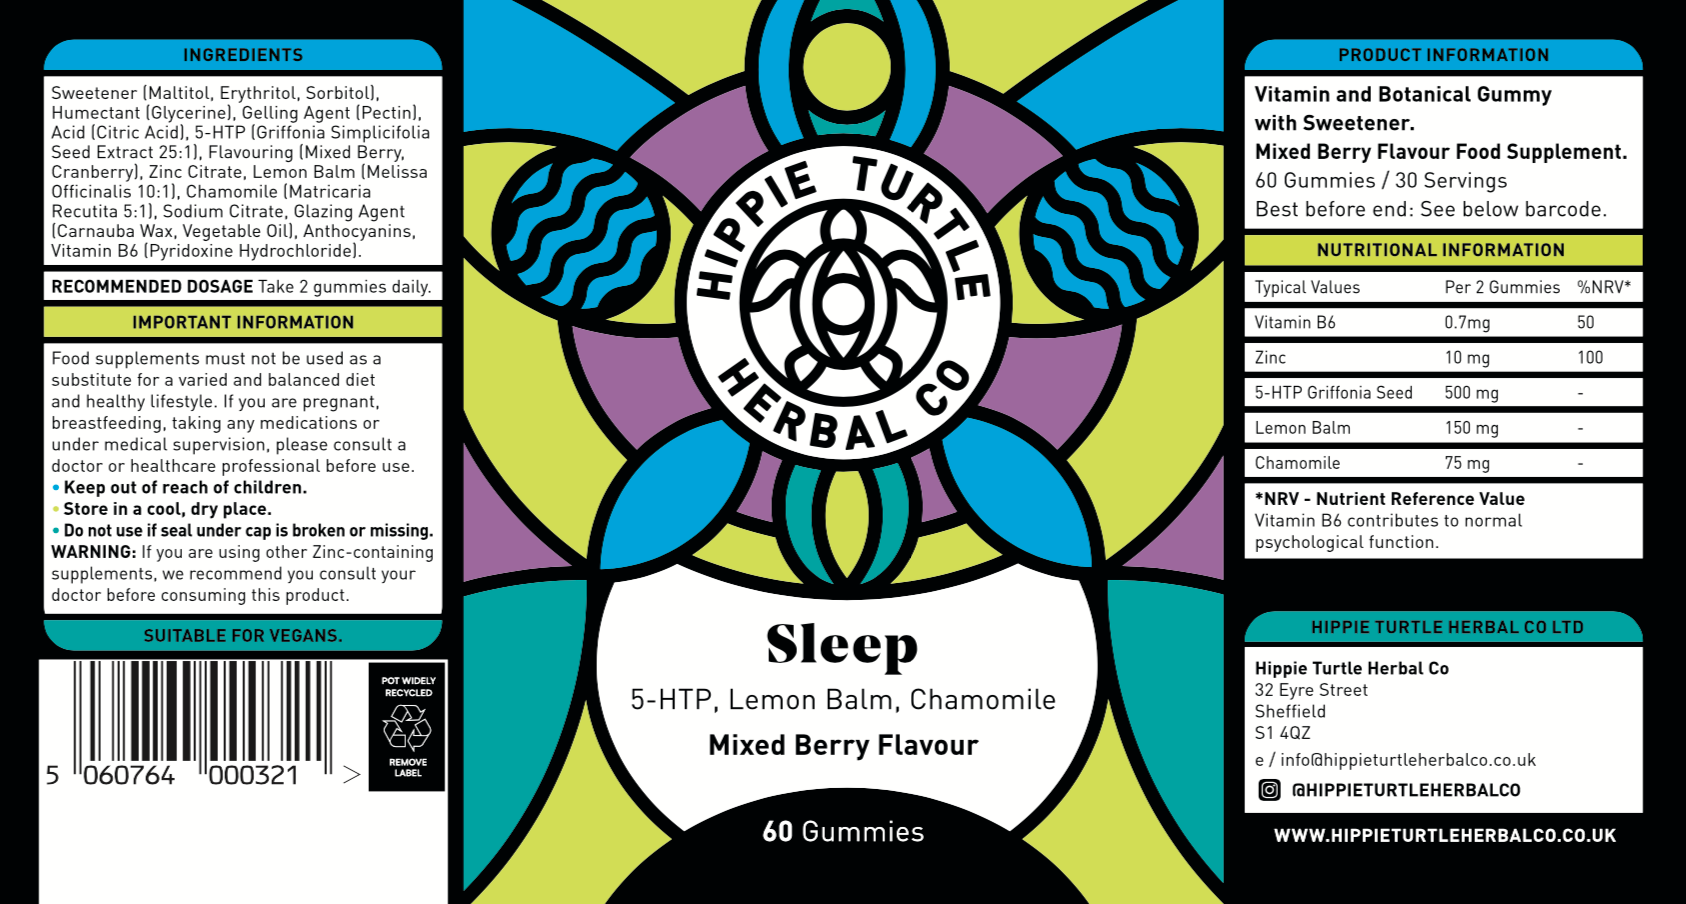 Hippie Turtle Herbal Co Chewable sleep supplement gummies containing 5 HTP, Lemon Balm, Chamomile, b vitamins and zinc